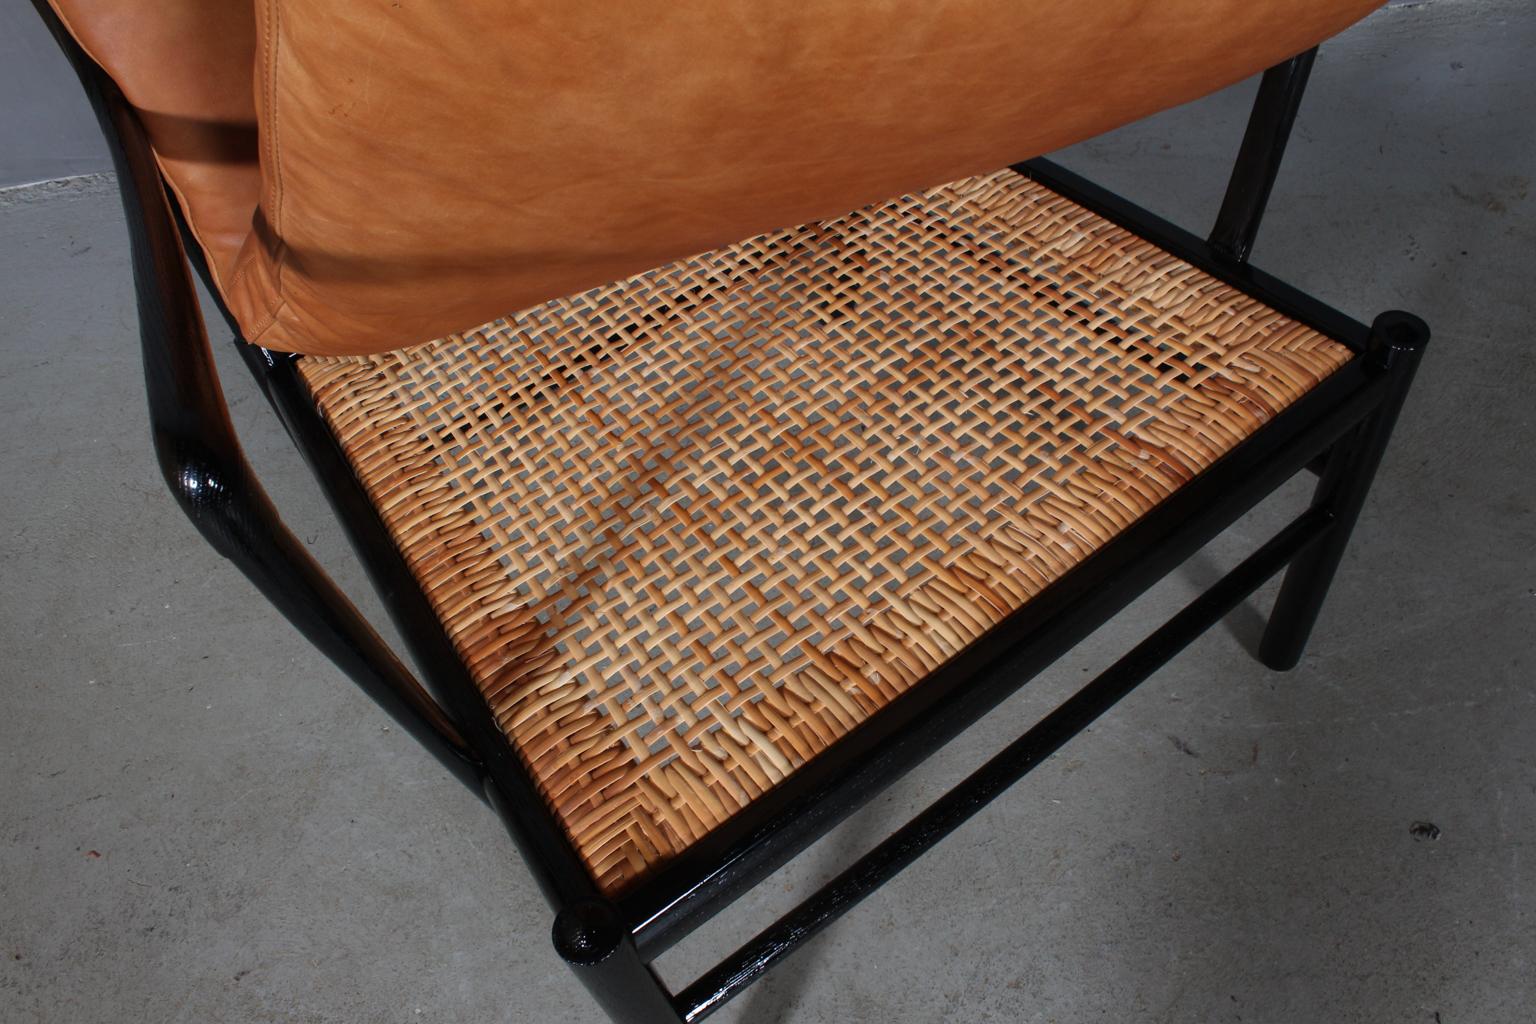 Ole Wanscher Colonial Chair 1